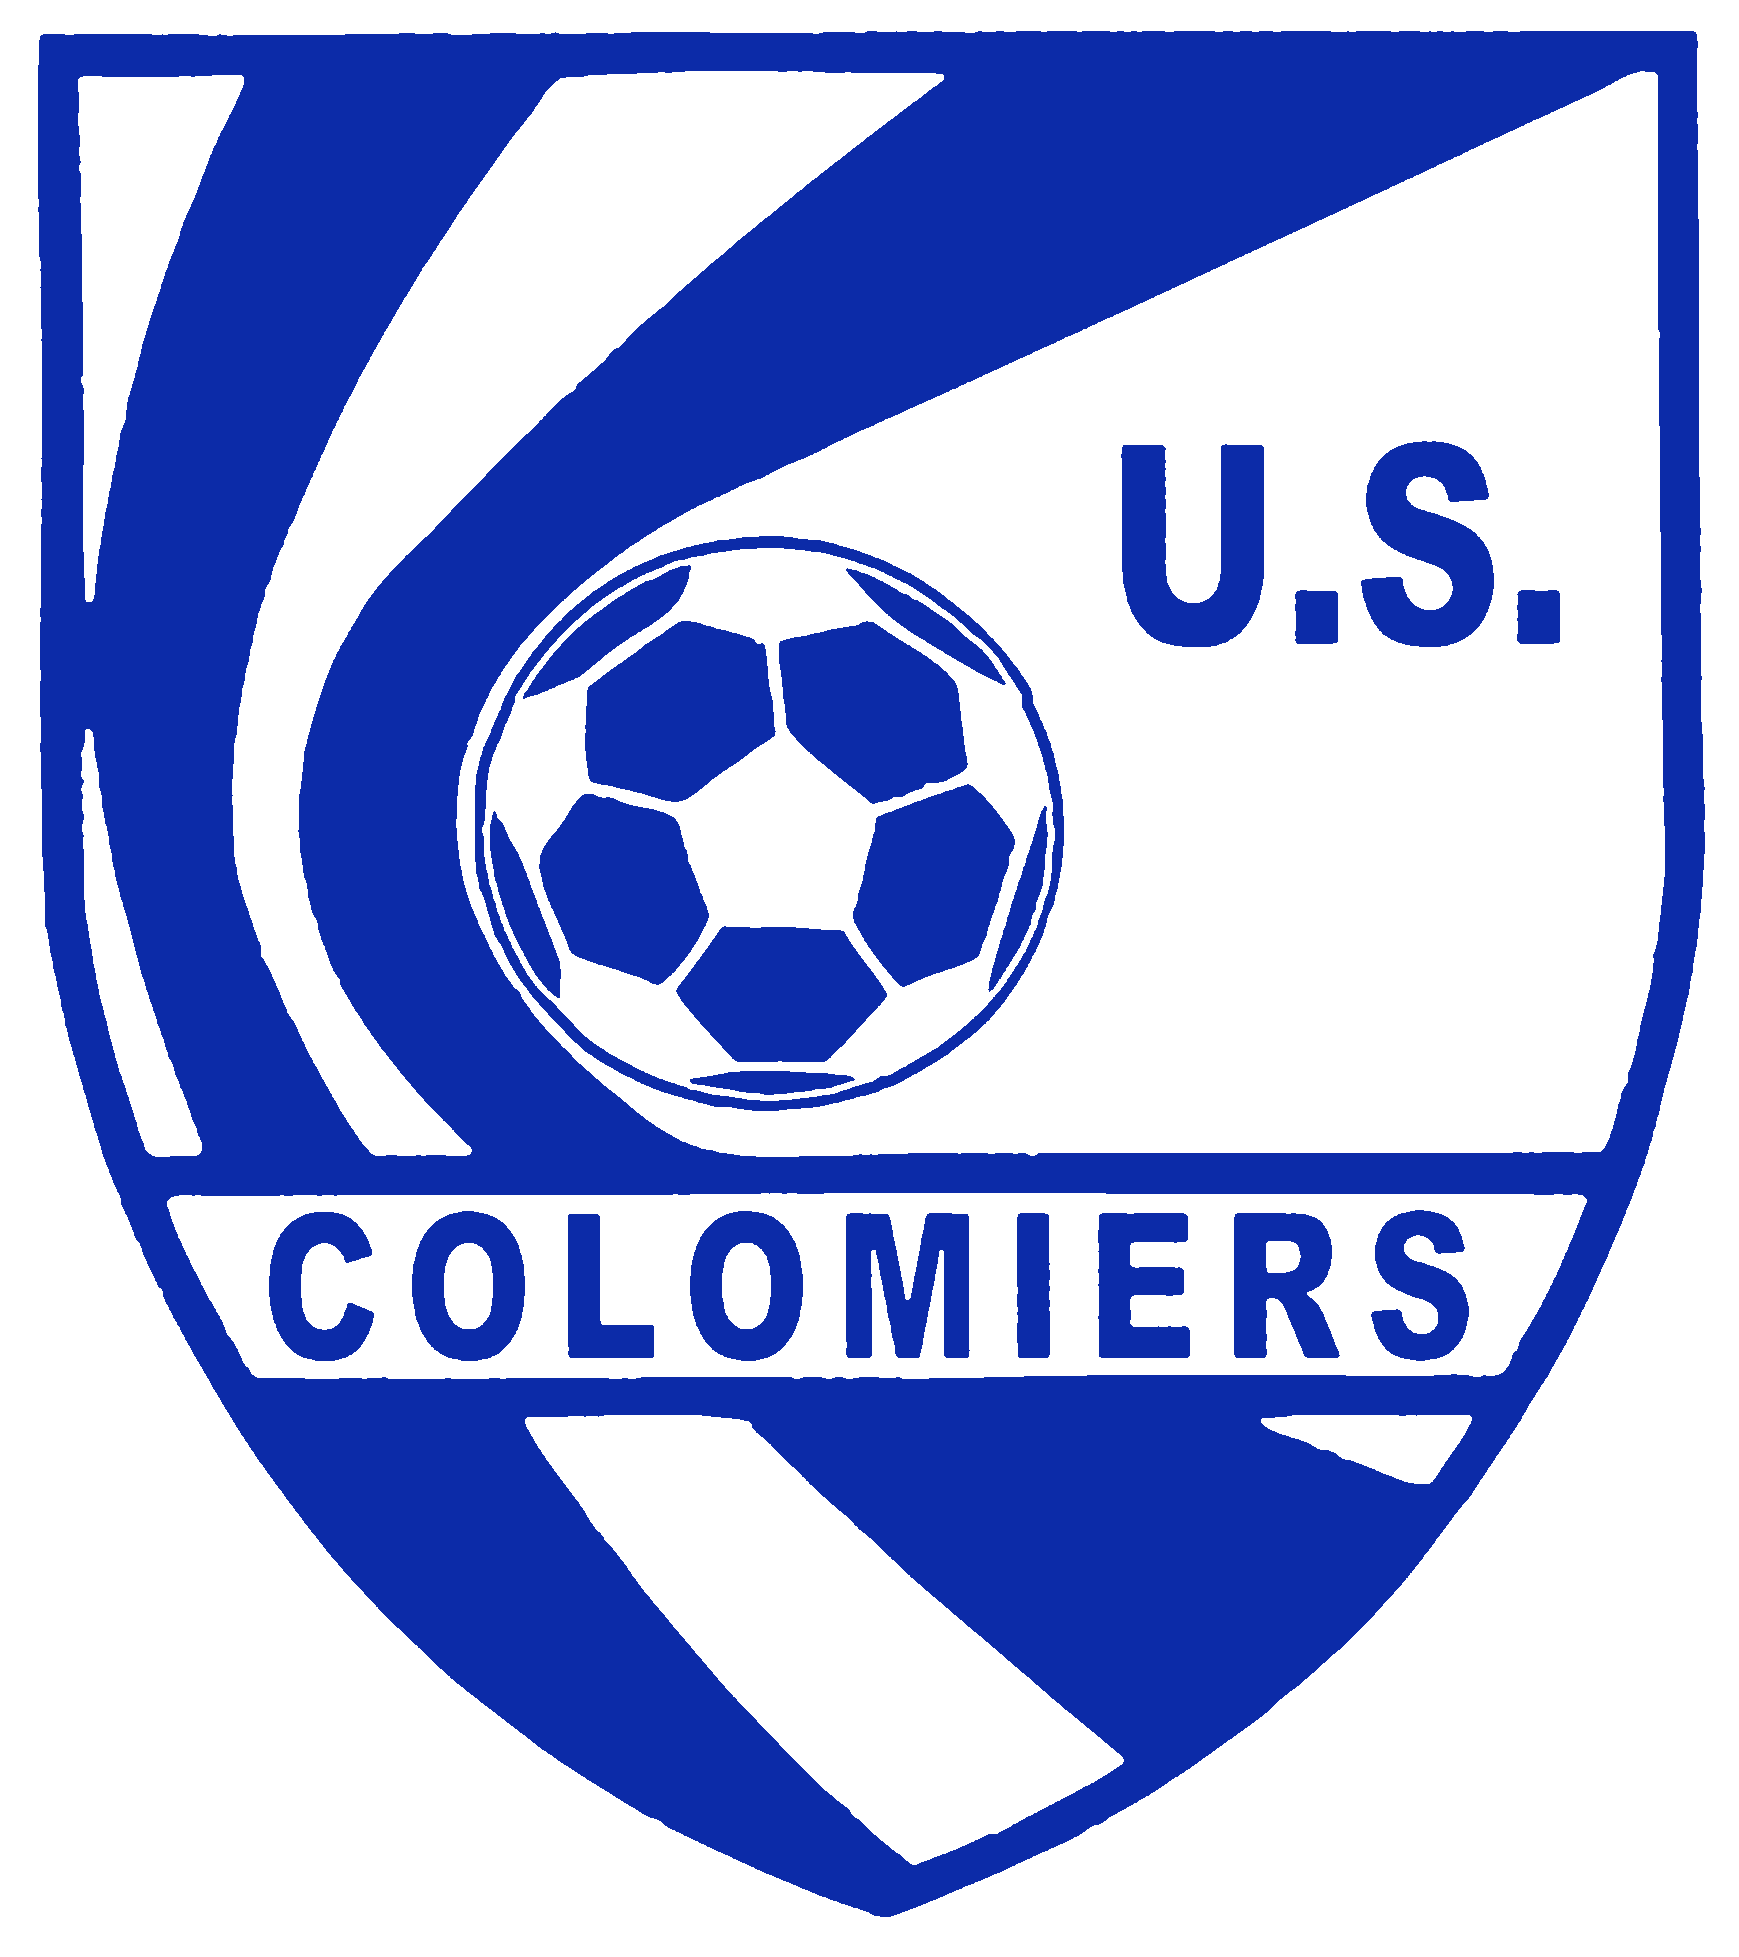 Colomiers logo